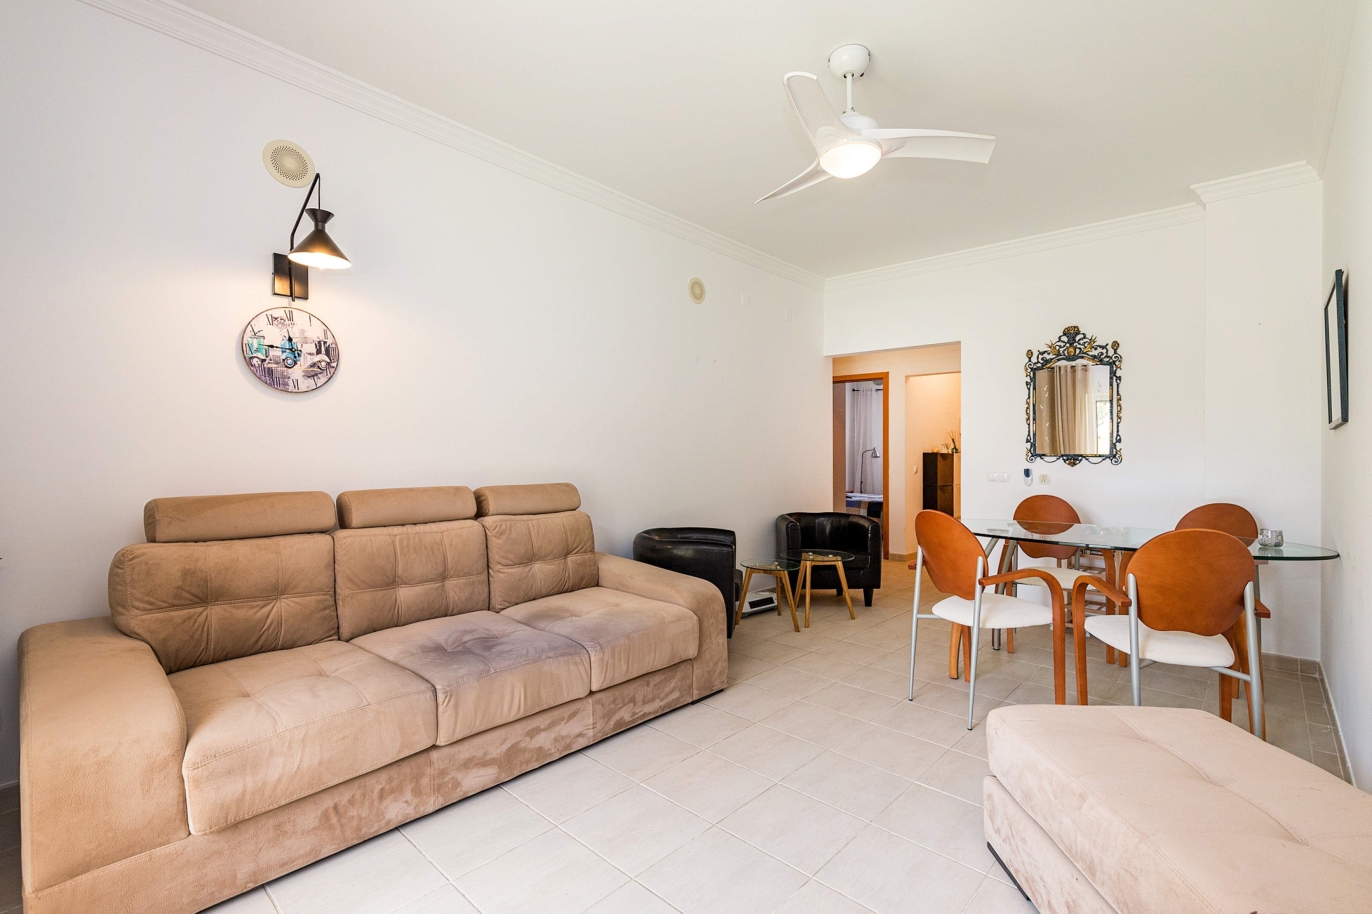 Apartamento T2, em condominio, para venda, Albufeira, Algarve_201447